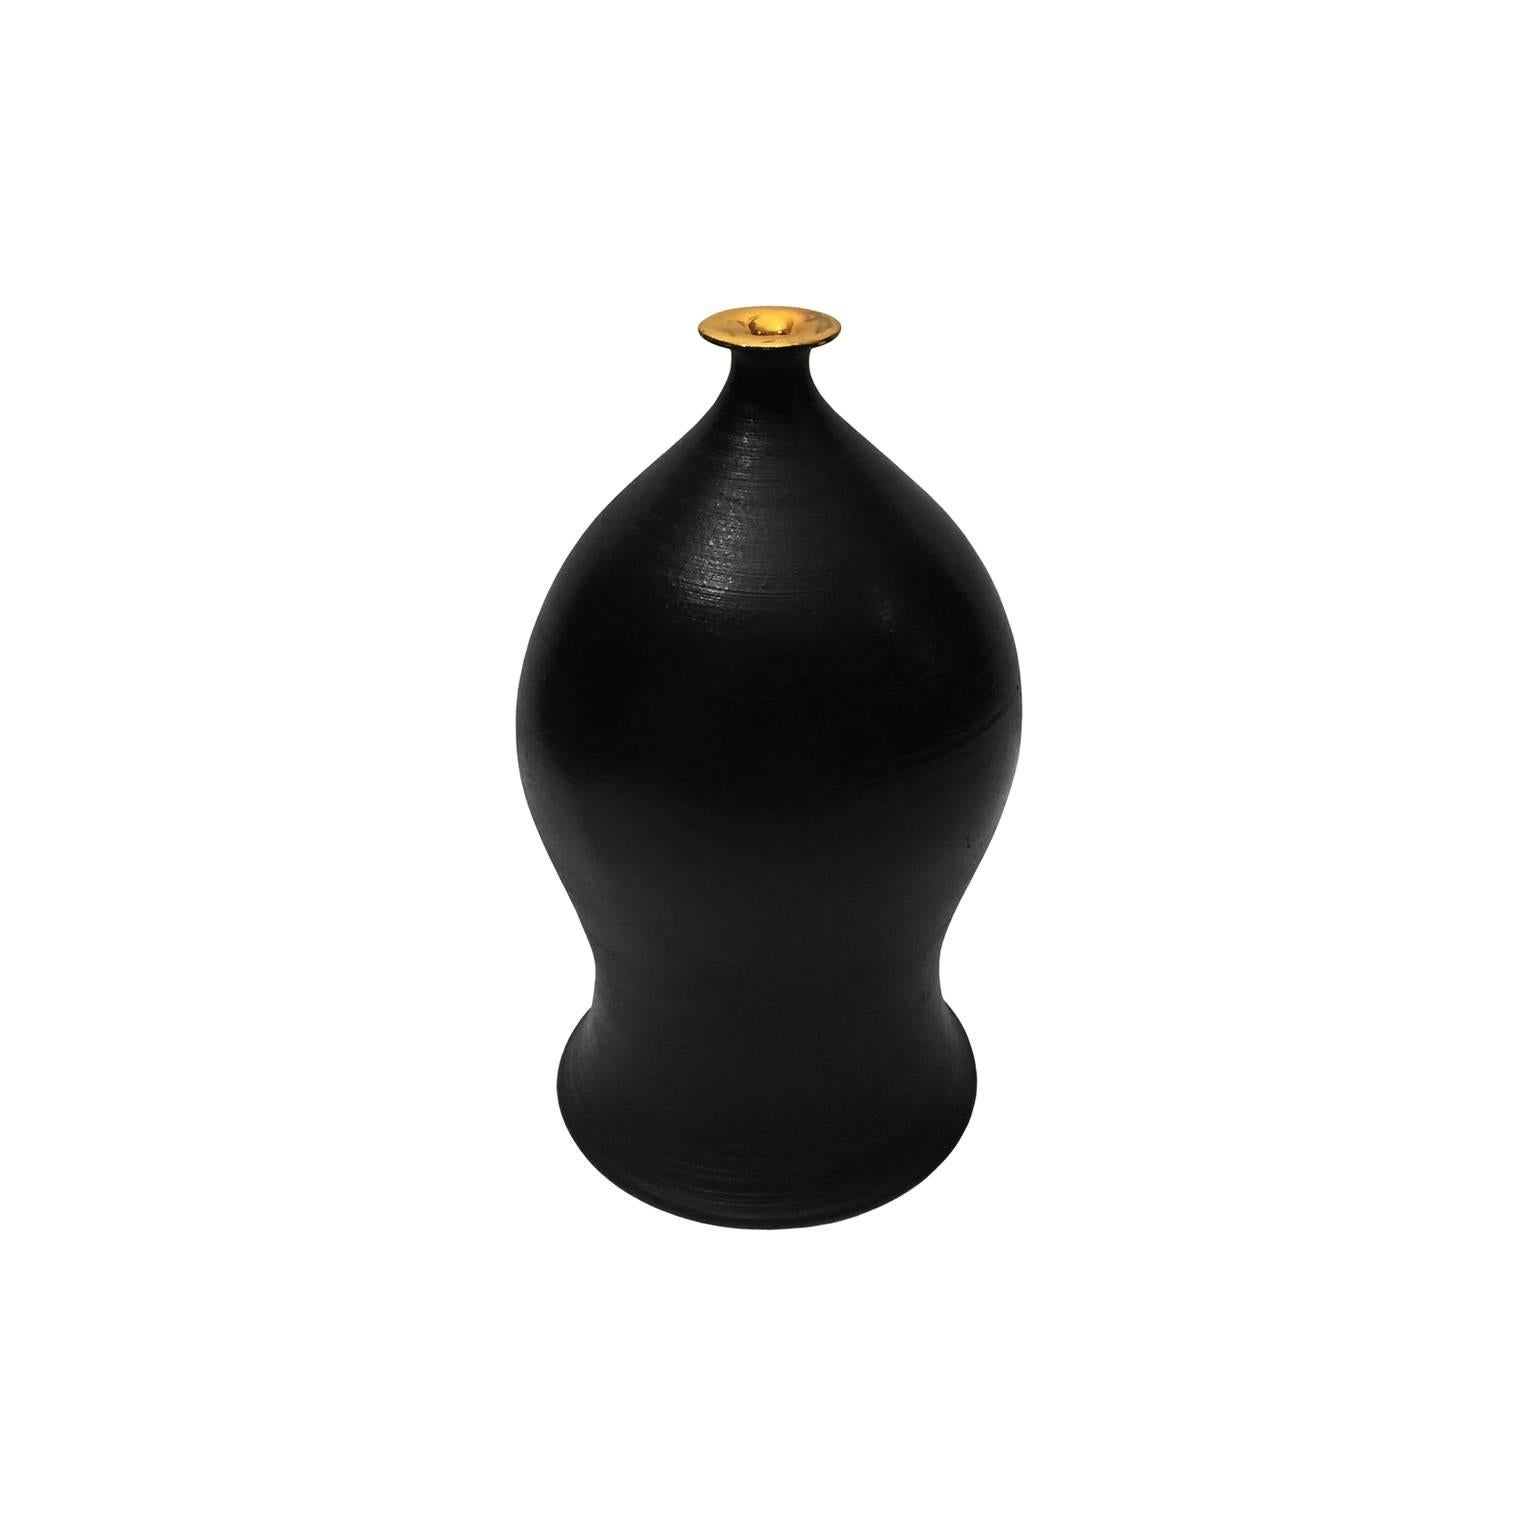 Satin Black Flared Ceramic Urn Bud Vase with Gold Luster Lip by Sandi Fellman